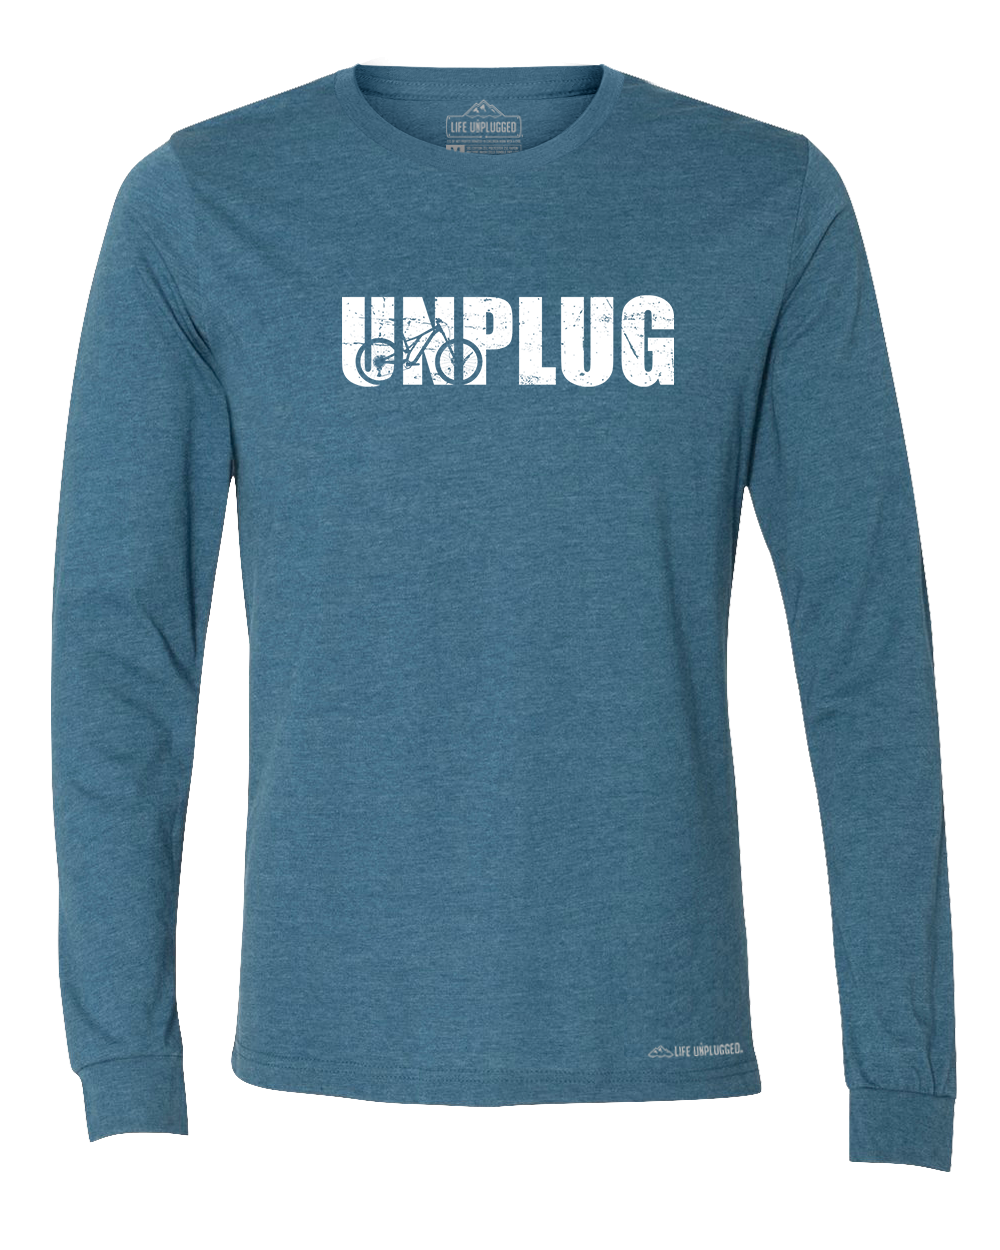 Unplug Mountain Bike Silhouette Premium Polyblend Long Sleeve T-Shirt